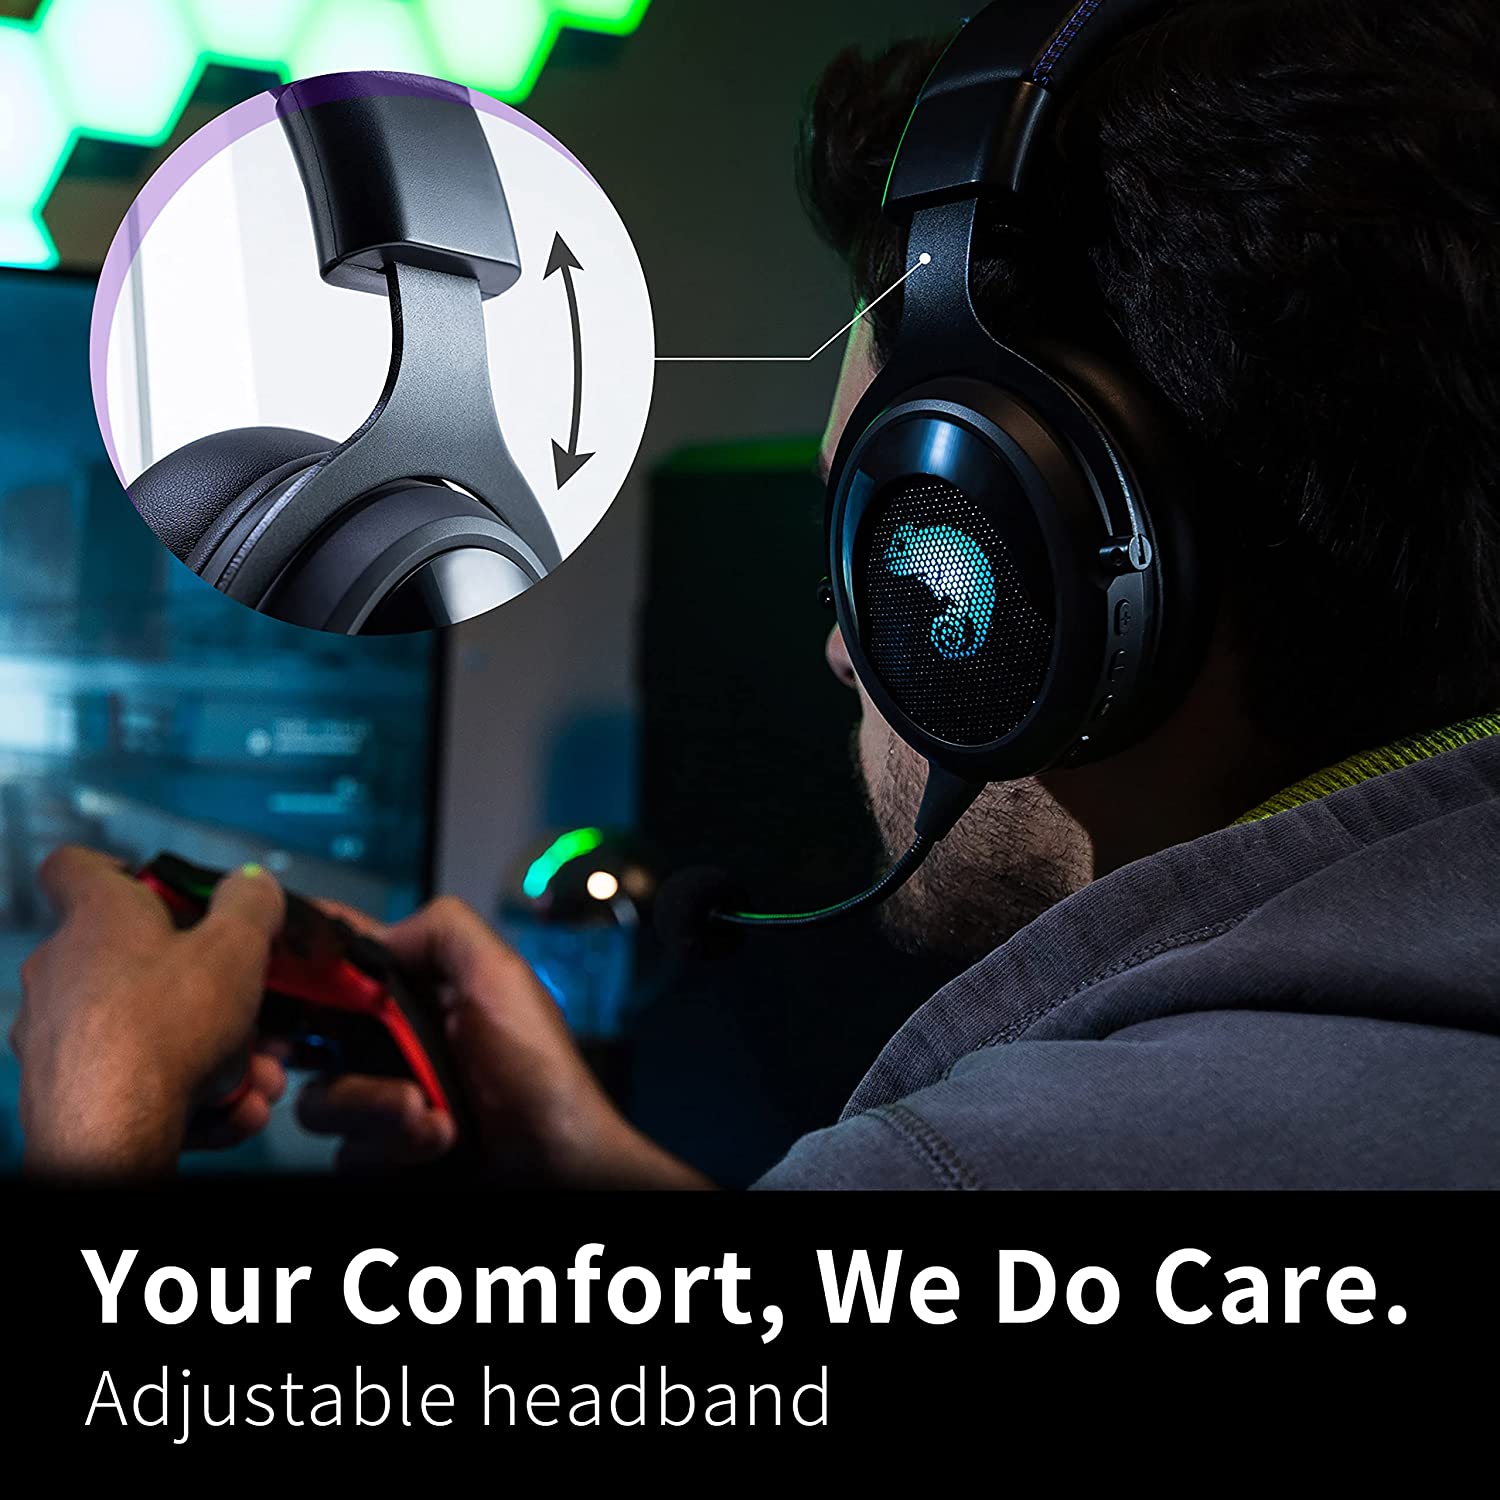 Brook ワイヤレスヘッドセット 2.4 GHz超低遅延 3.5mm有線モード PS5 